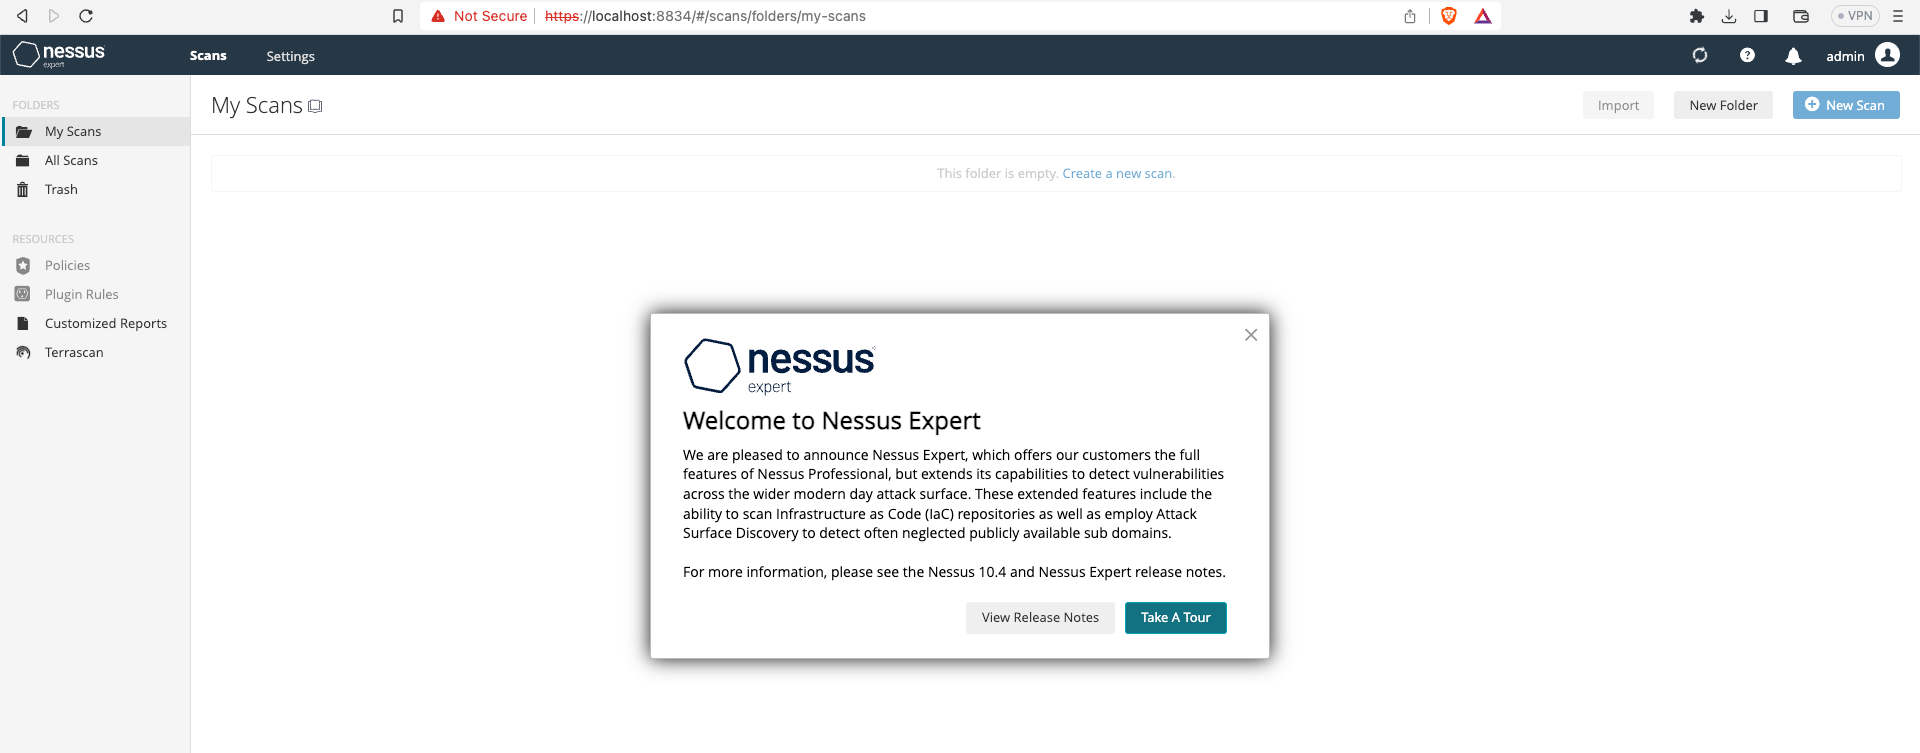 Nessus: Your Digital Sherlock Exposing Vulnerabilities